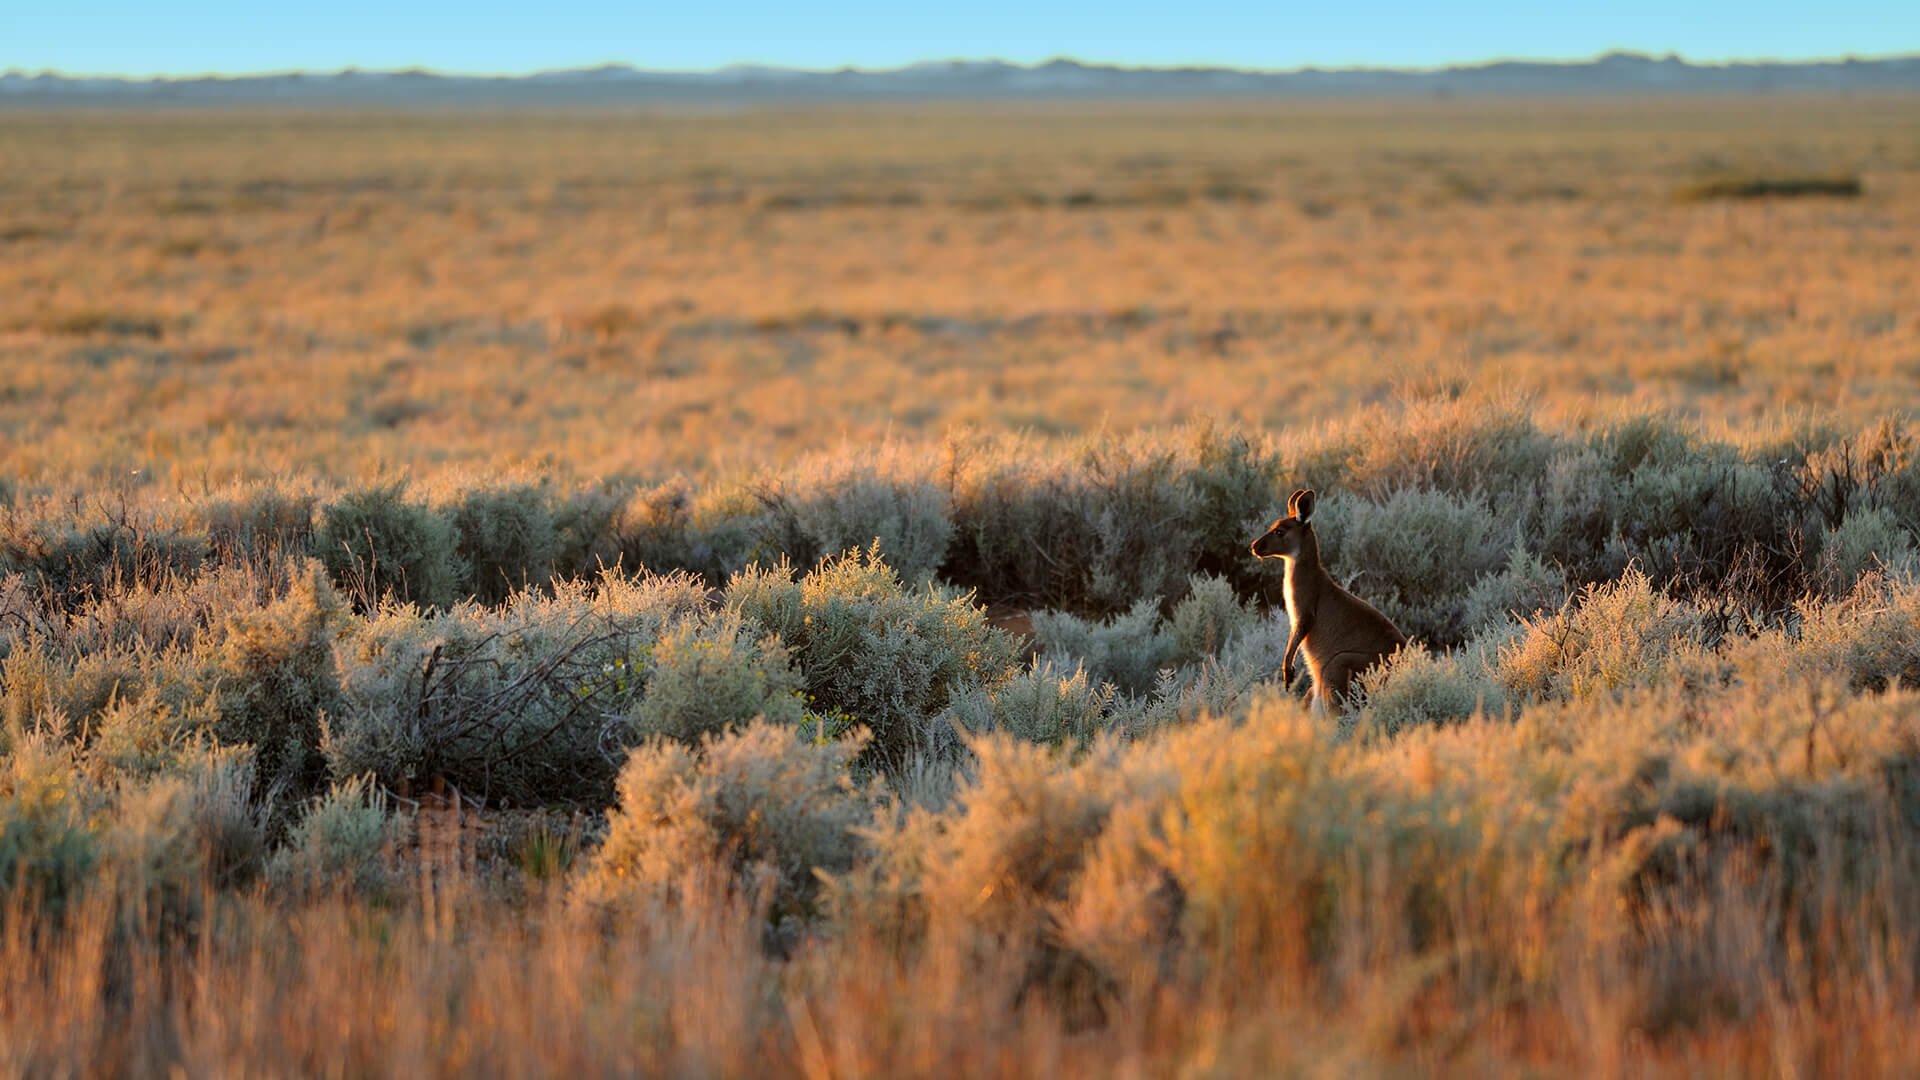 Australian outback landscape with a lone kangaroo